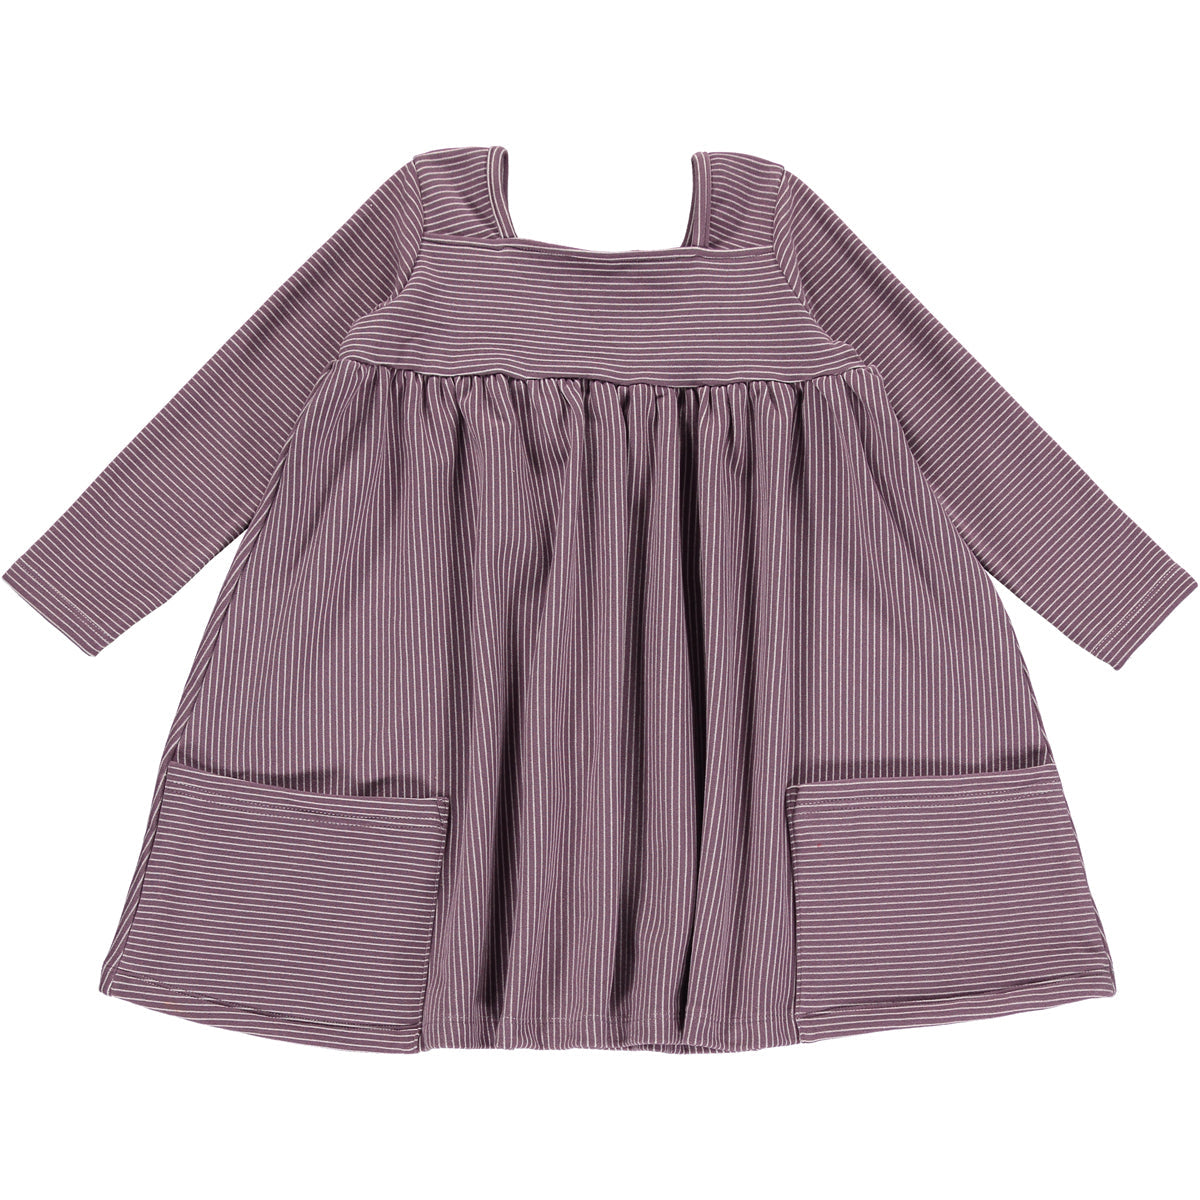 Vignette Rylie Dress Long Sleeve | Purple & Cream Stripe